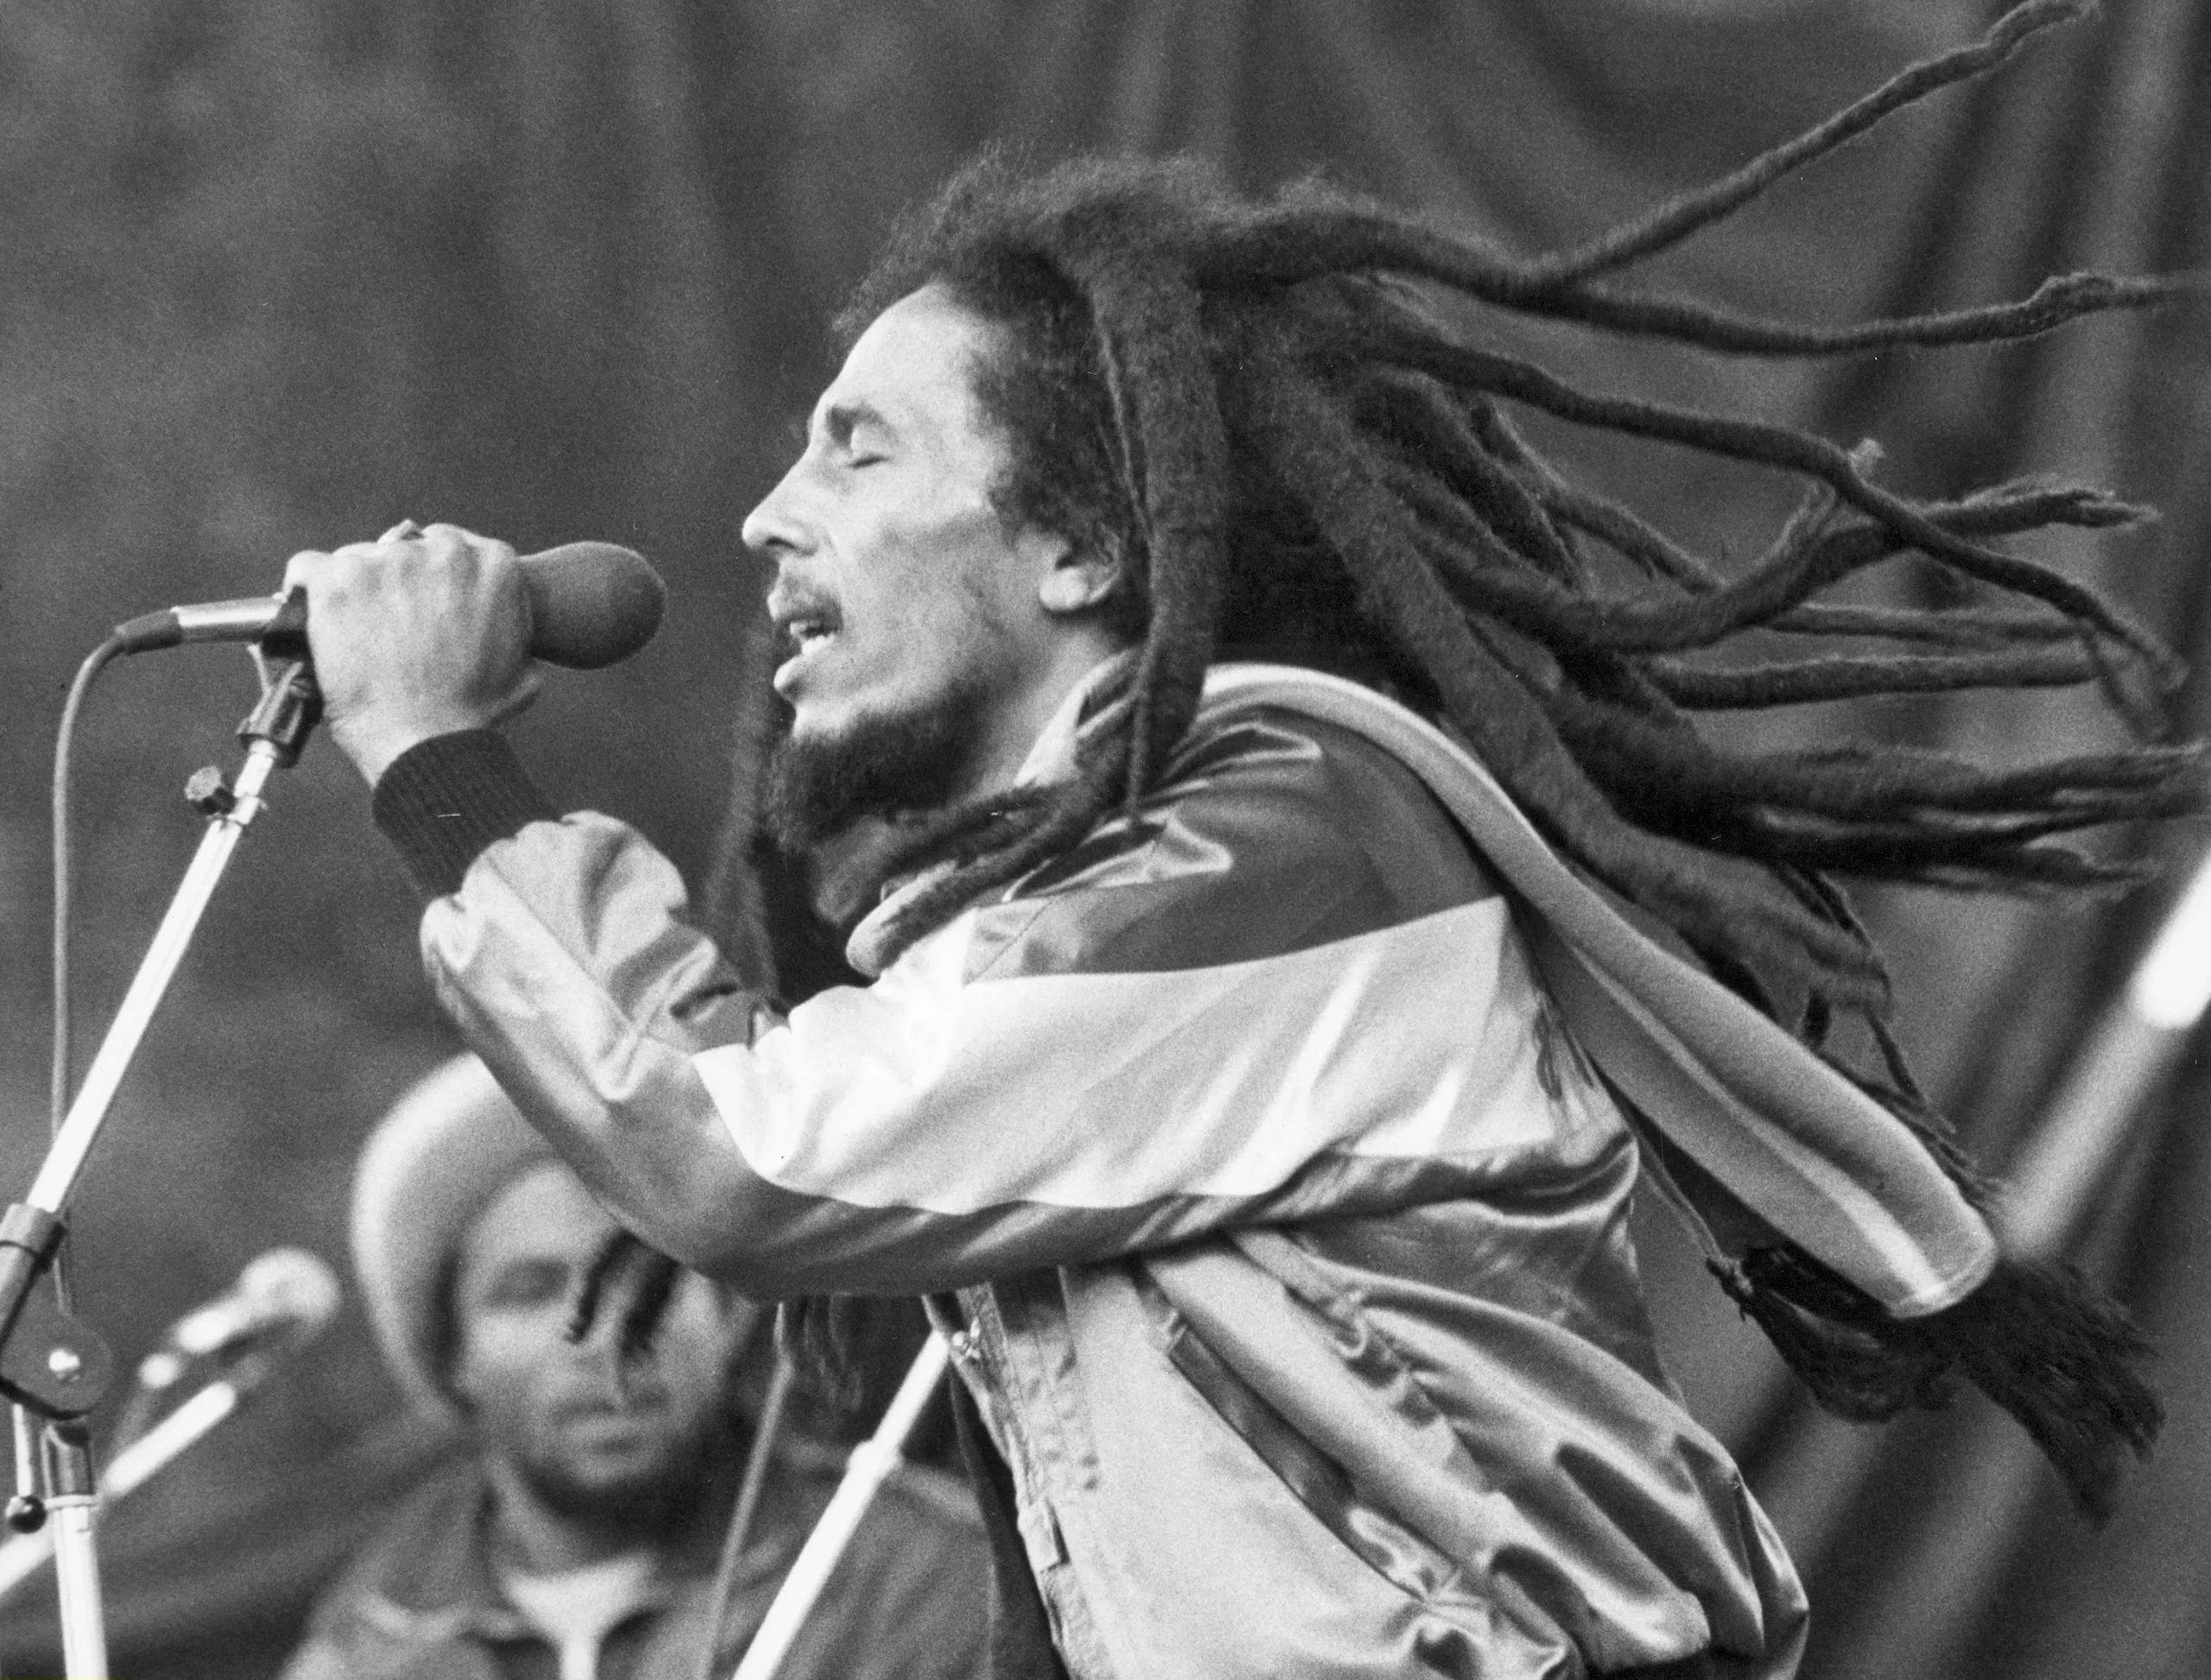 Bob Marley : légende du reggae et icône musicale mondiale